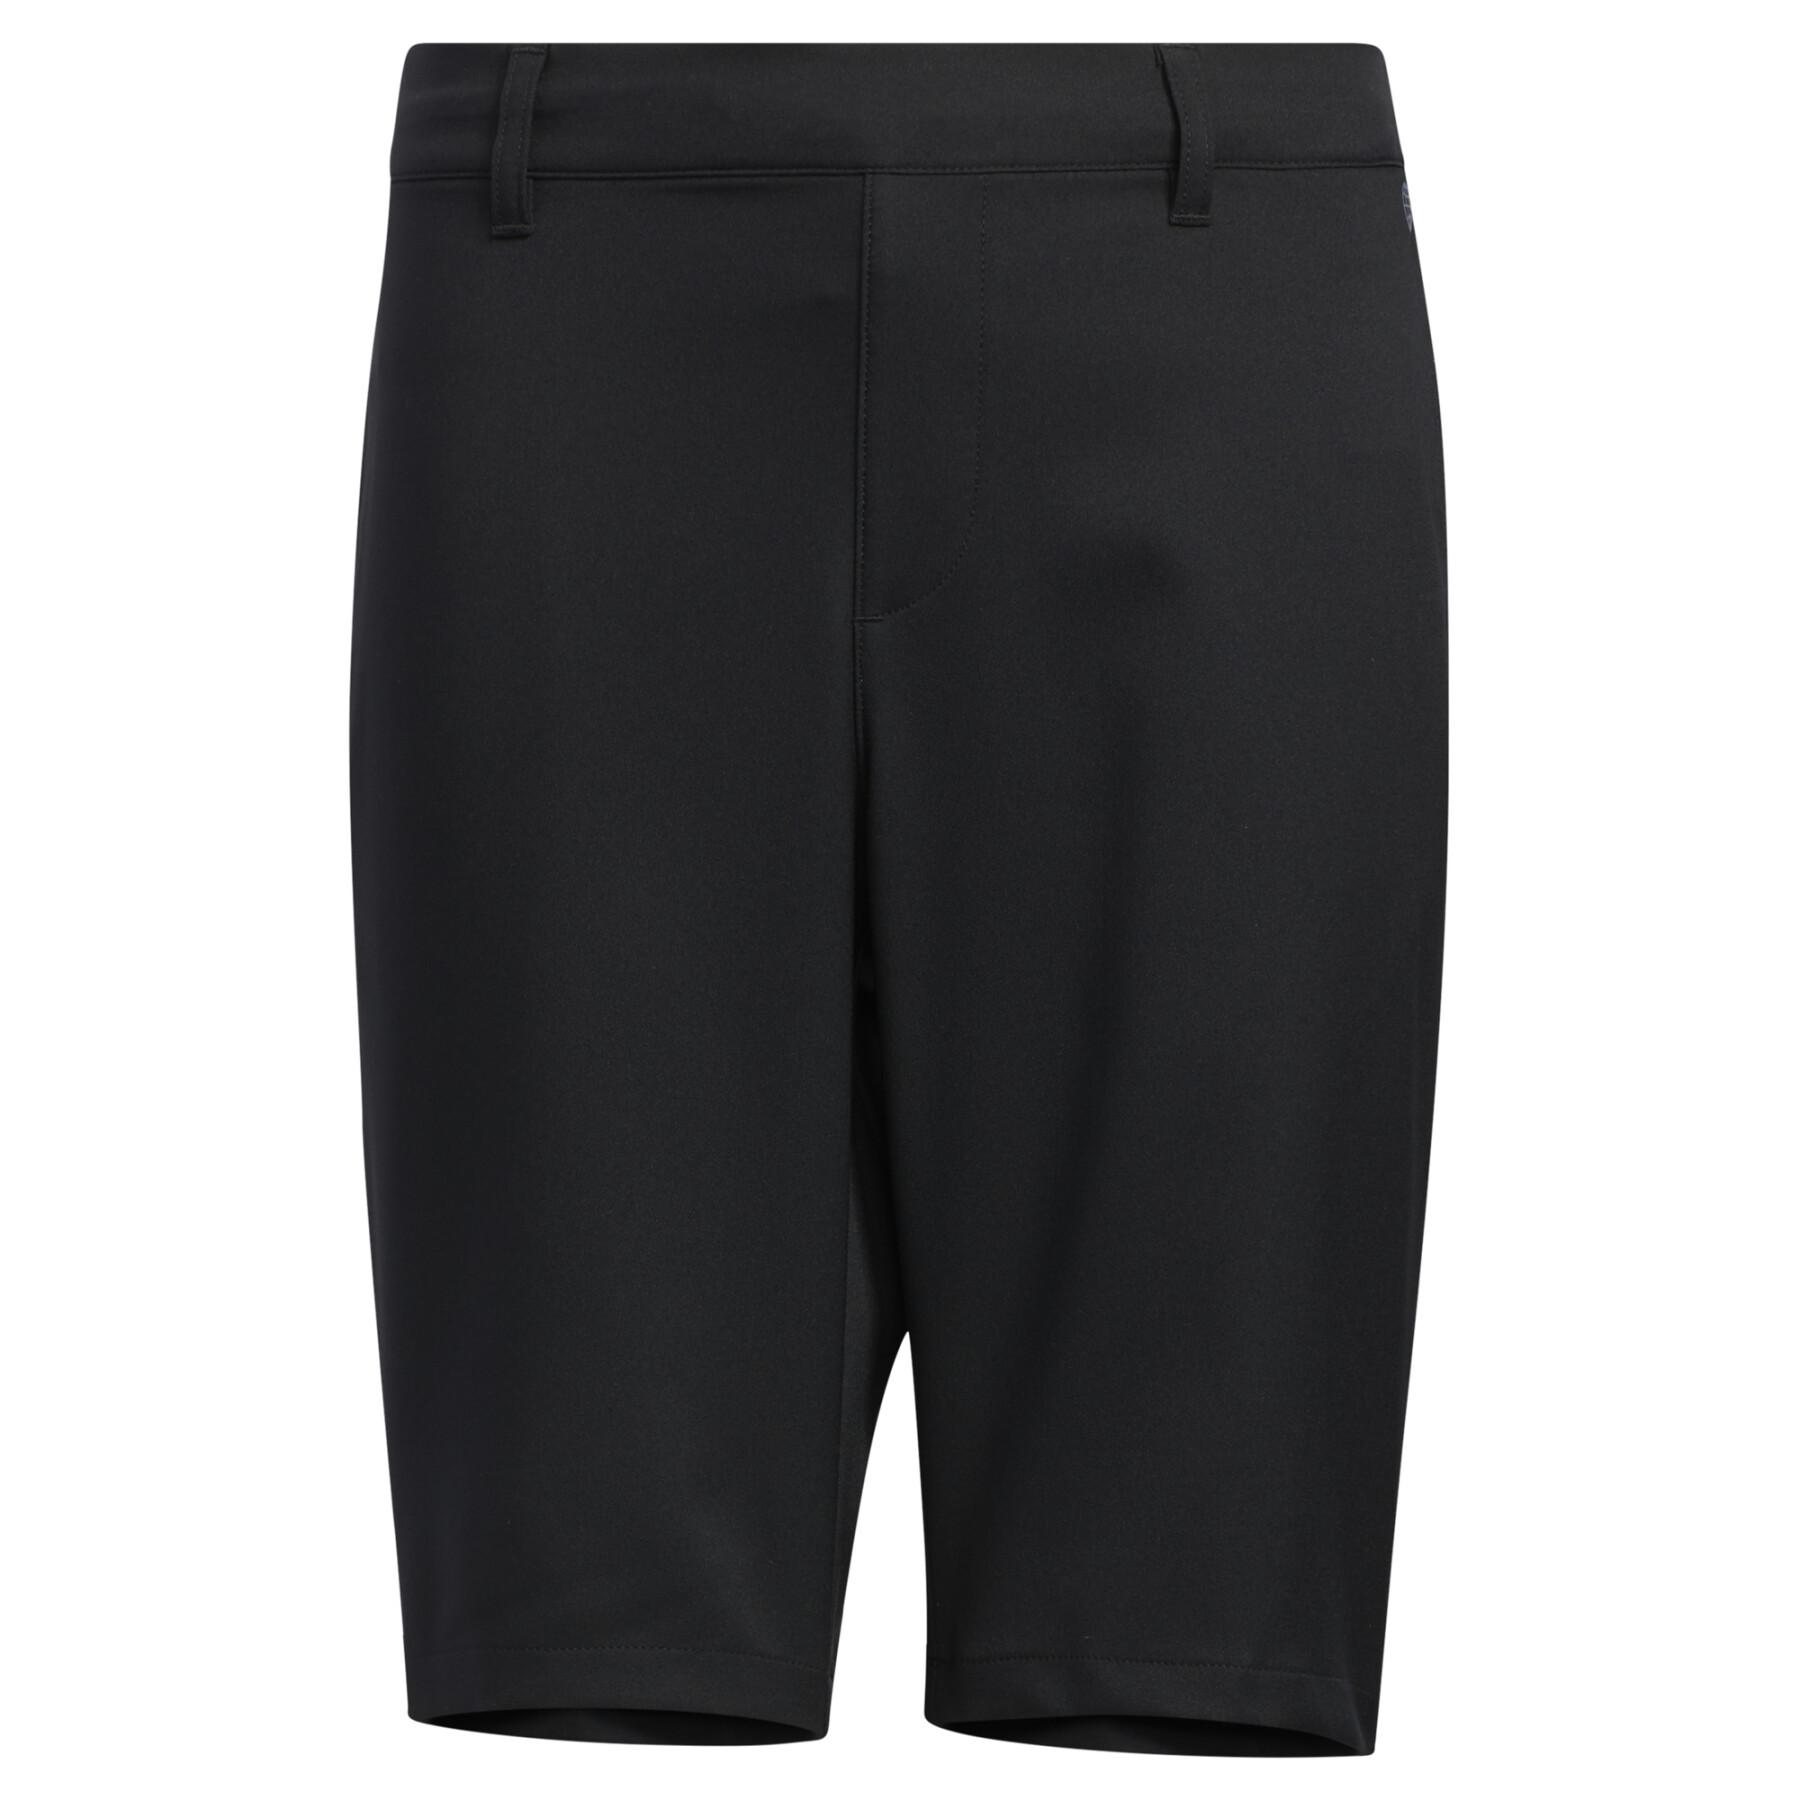 Kinder shorts adidas Ultimate365 Adjustable Golf